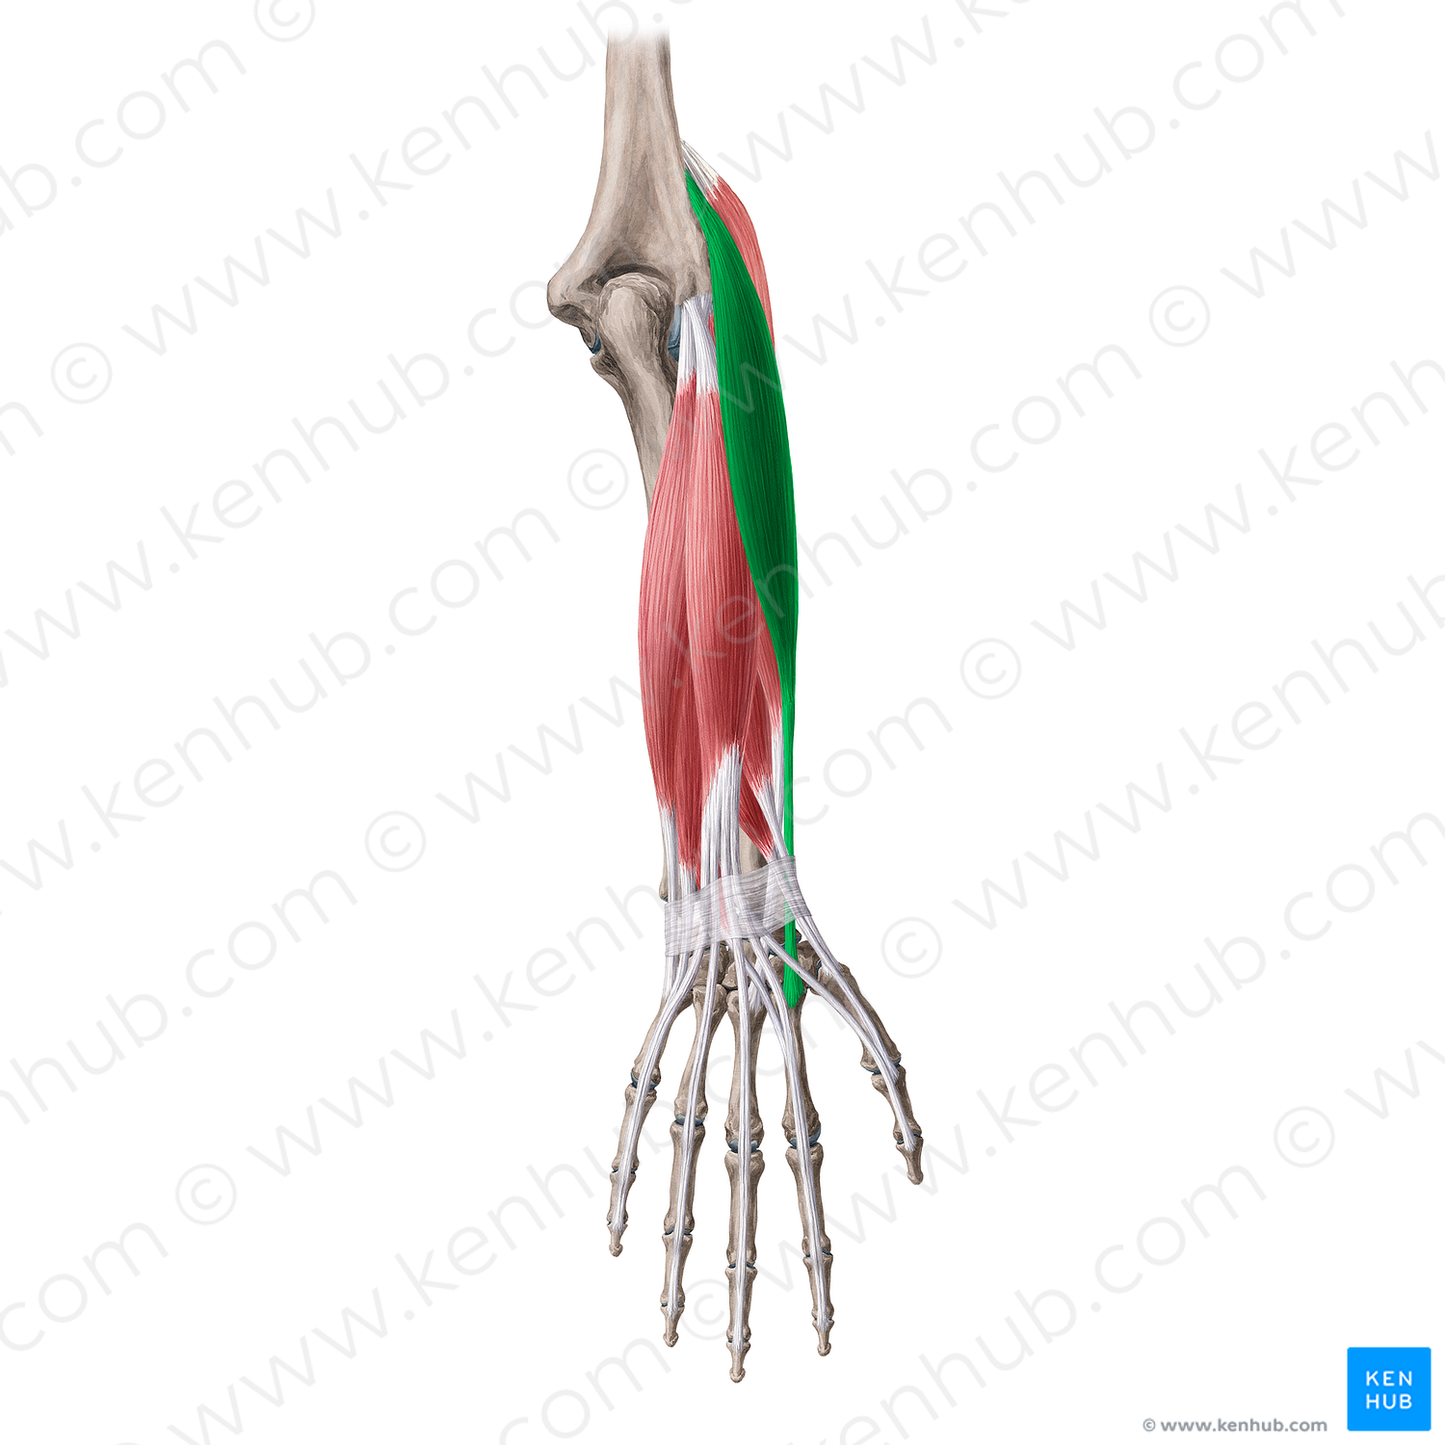 Extensor carpi radialis longus muscle (#20069)